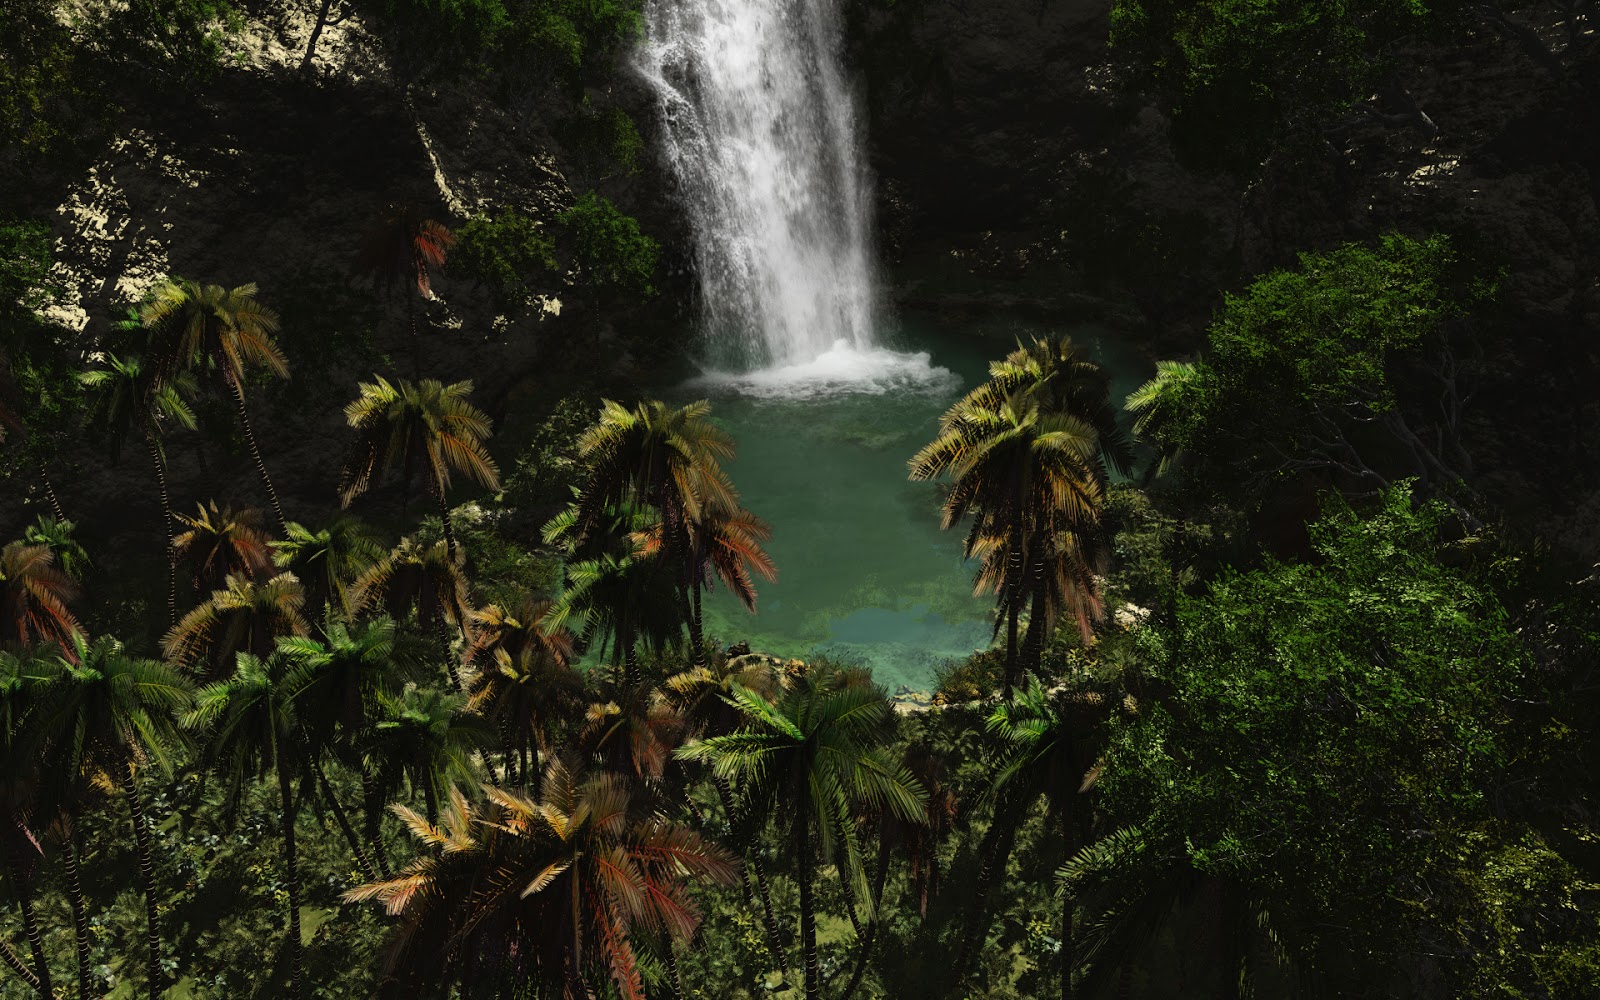 Beautiful Waterfall HD Wallpaper